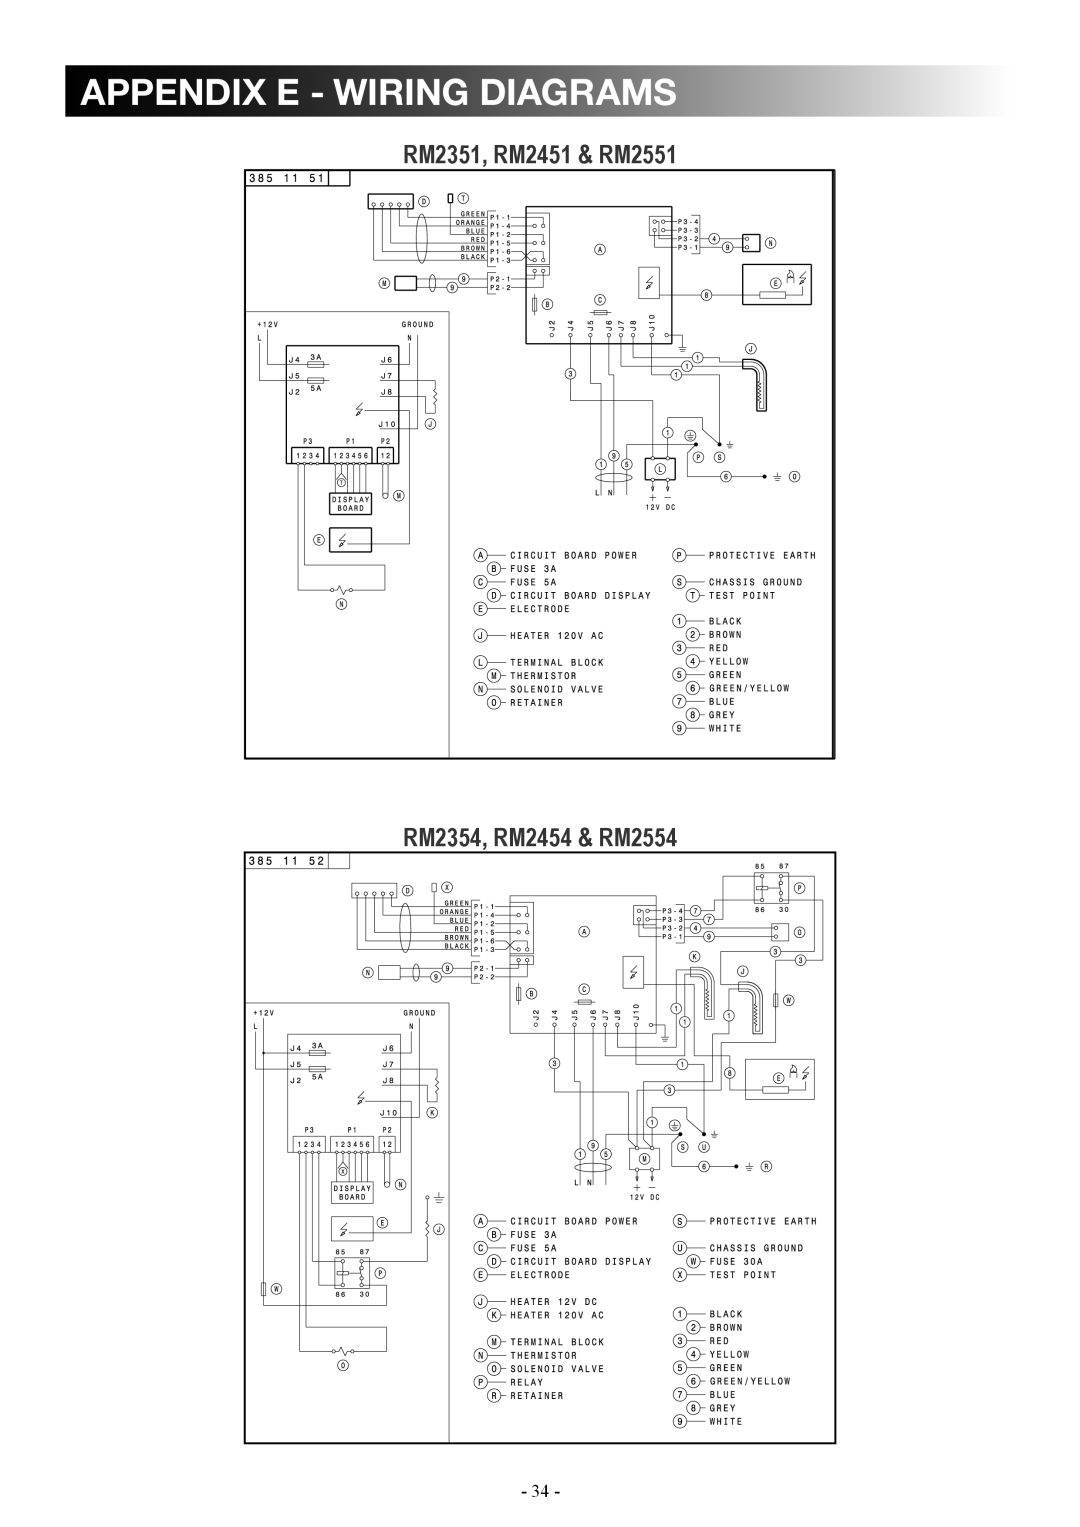 Dometic DM2862 manual appendix e - wiring diagrams, RM2351, RM2451 & RM2551, RM2354, RM2454 & RM2554 